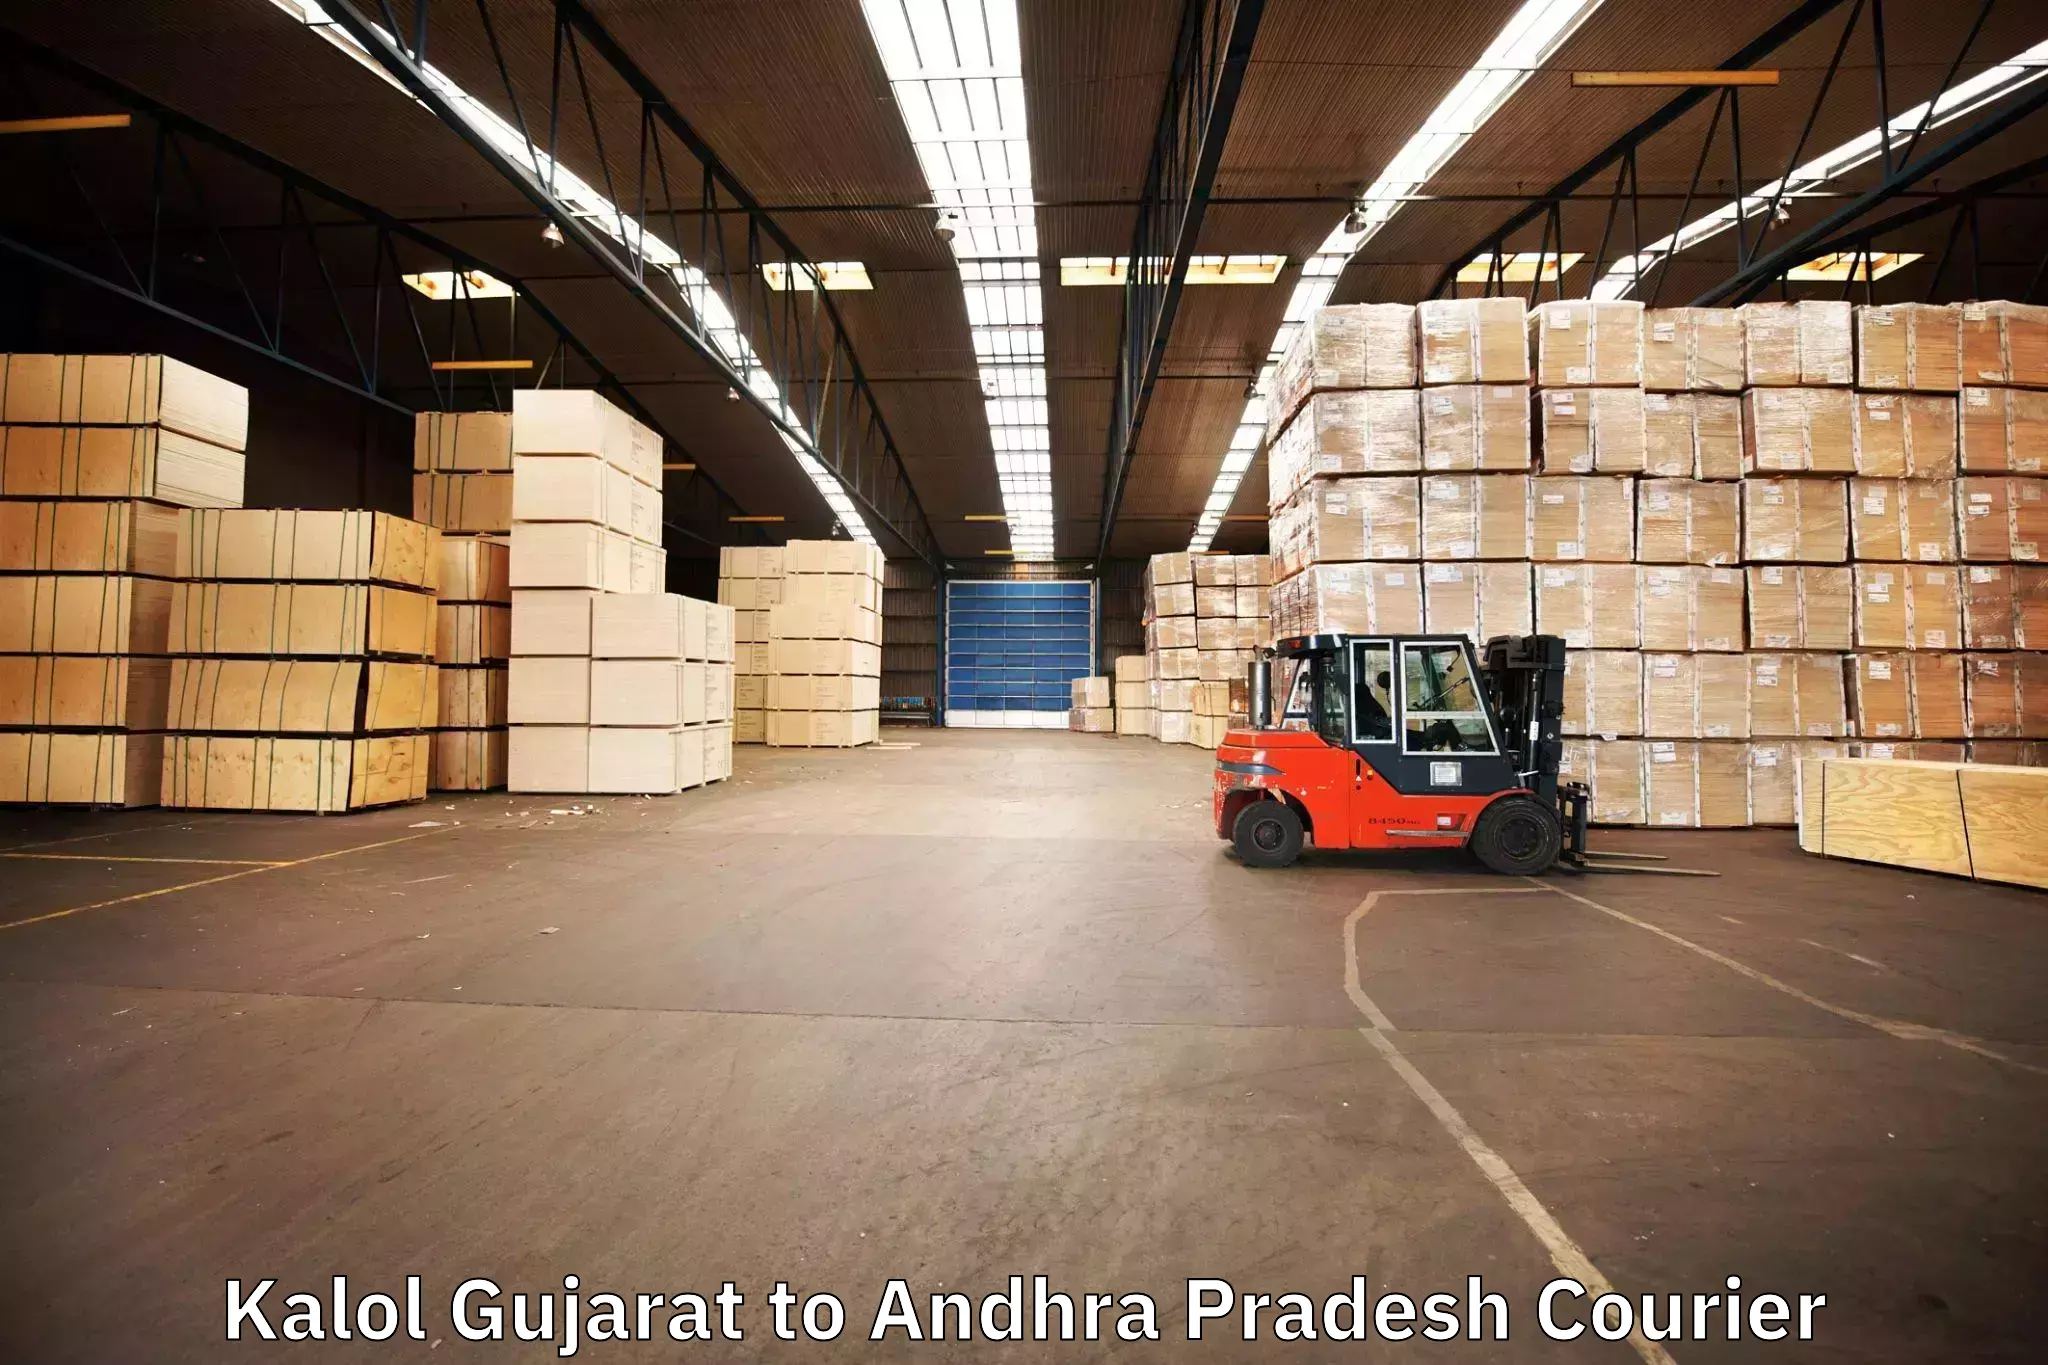 Specialized moving company Kalol Gujarat to Visakhapatnam Port